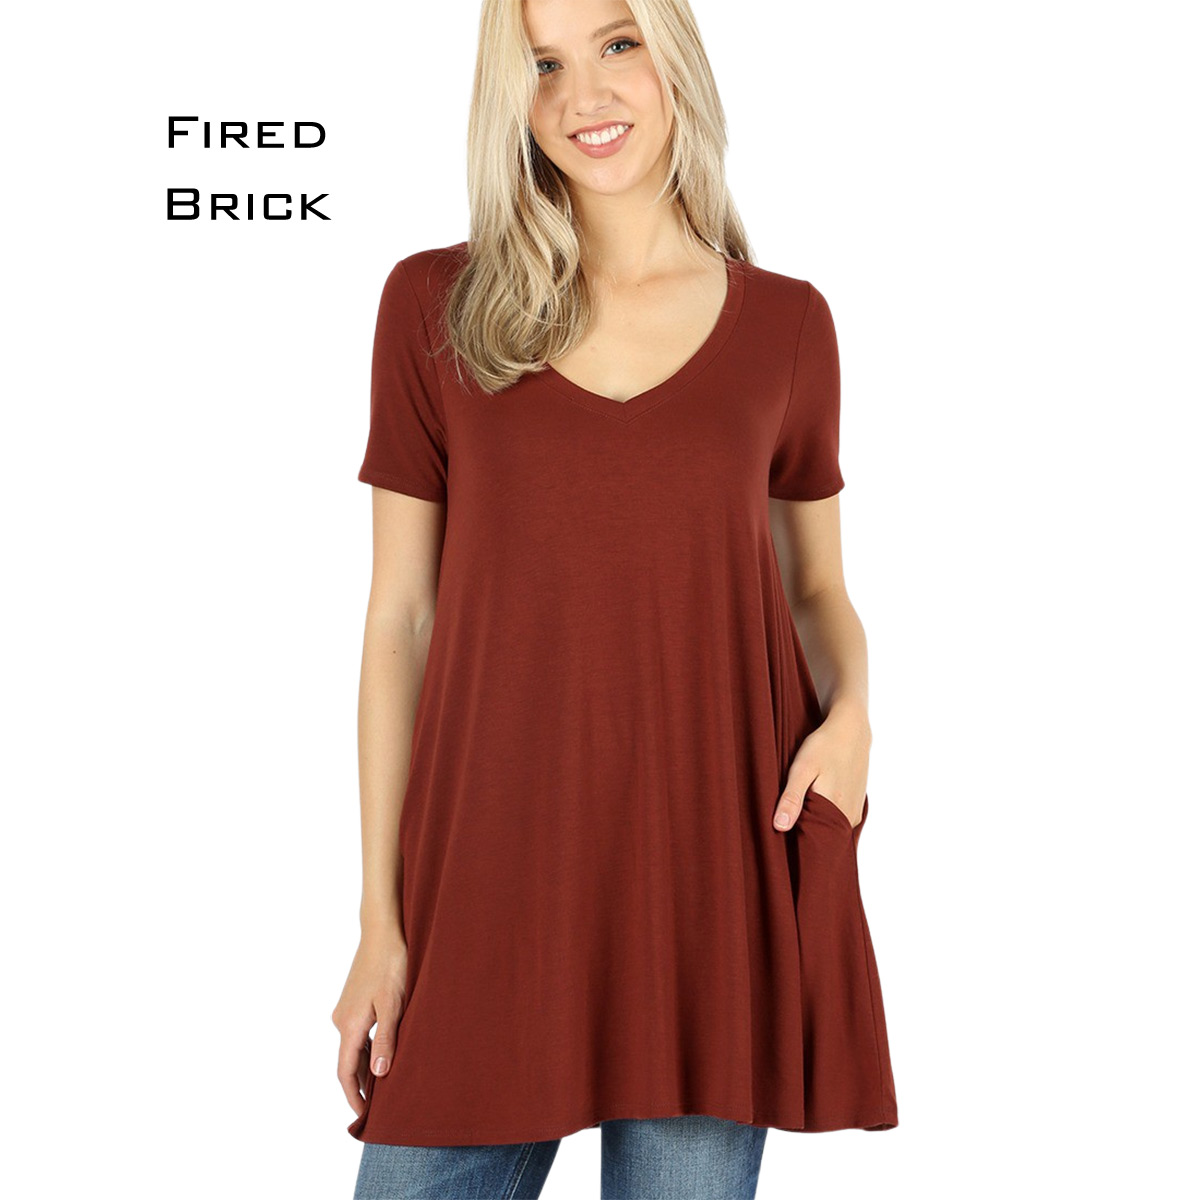 FIRED BRICK Short Sleeve V-Neck Top w/ Pockets 1635